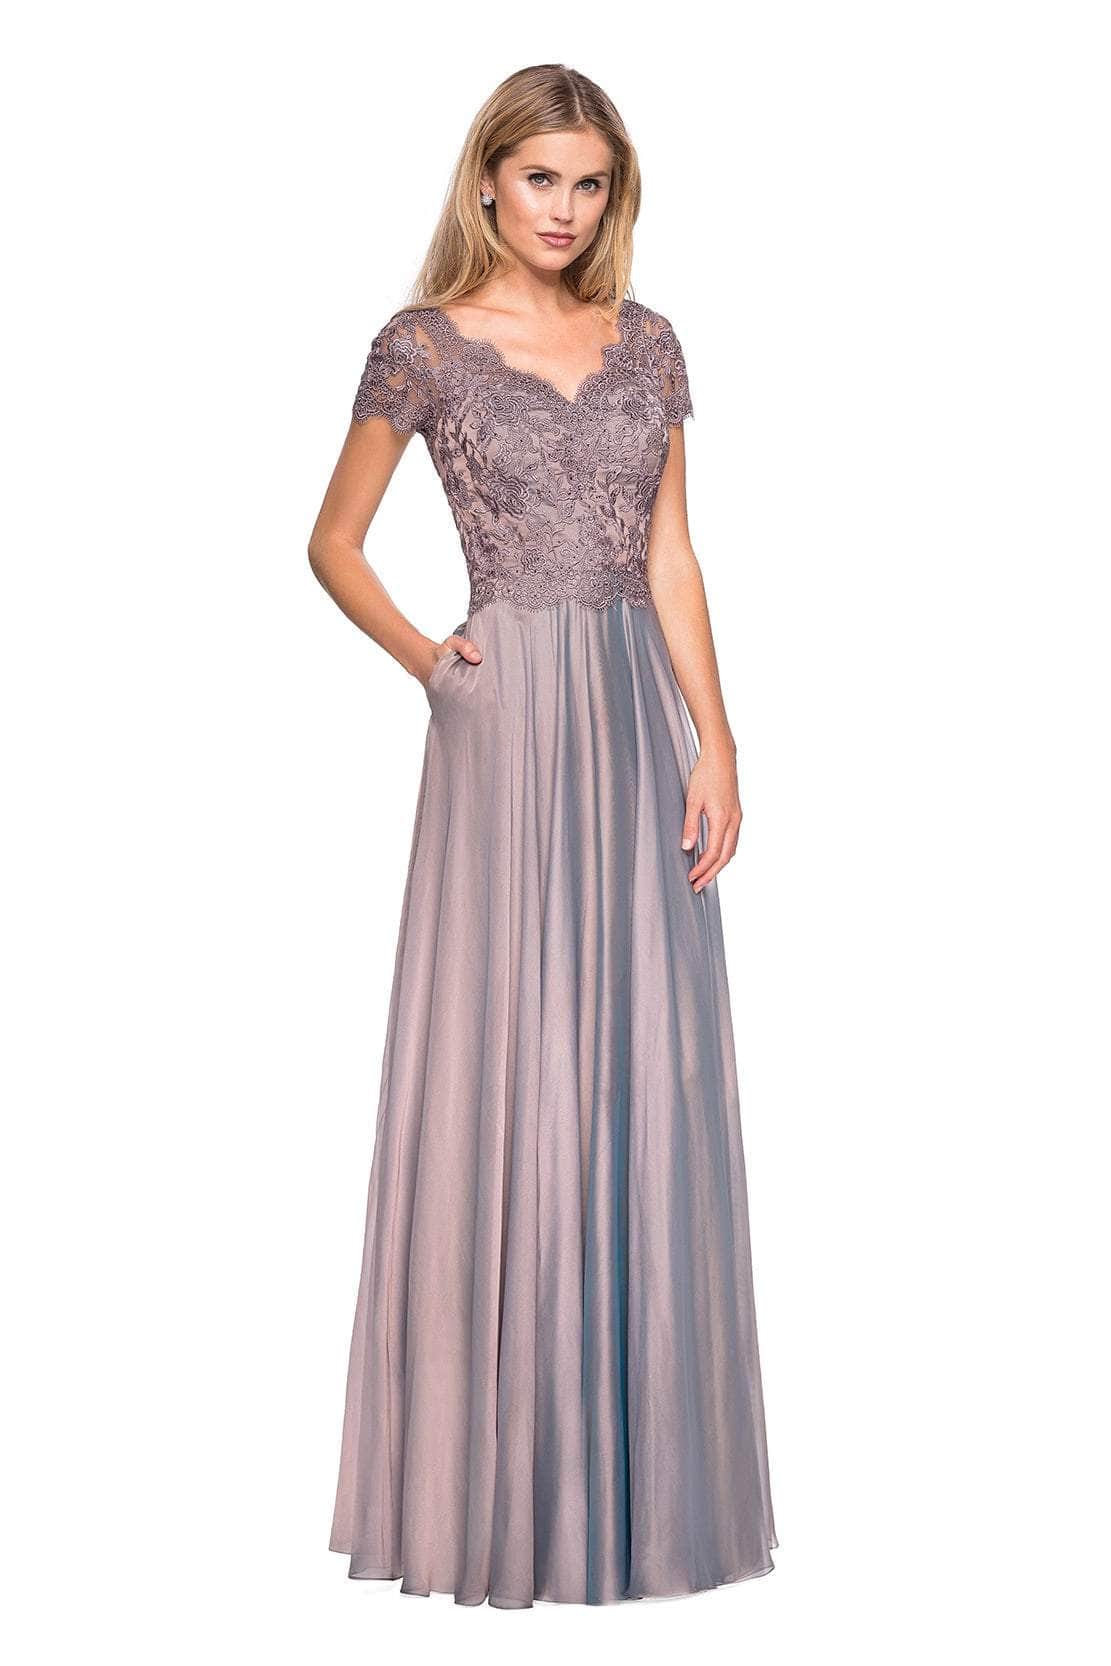 Image of La Femme - 27098 Embordered Lace Bodice Chiffon A- Line Gown